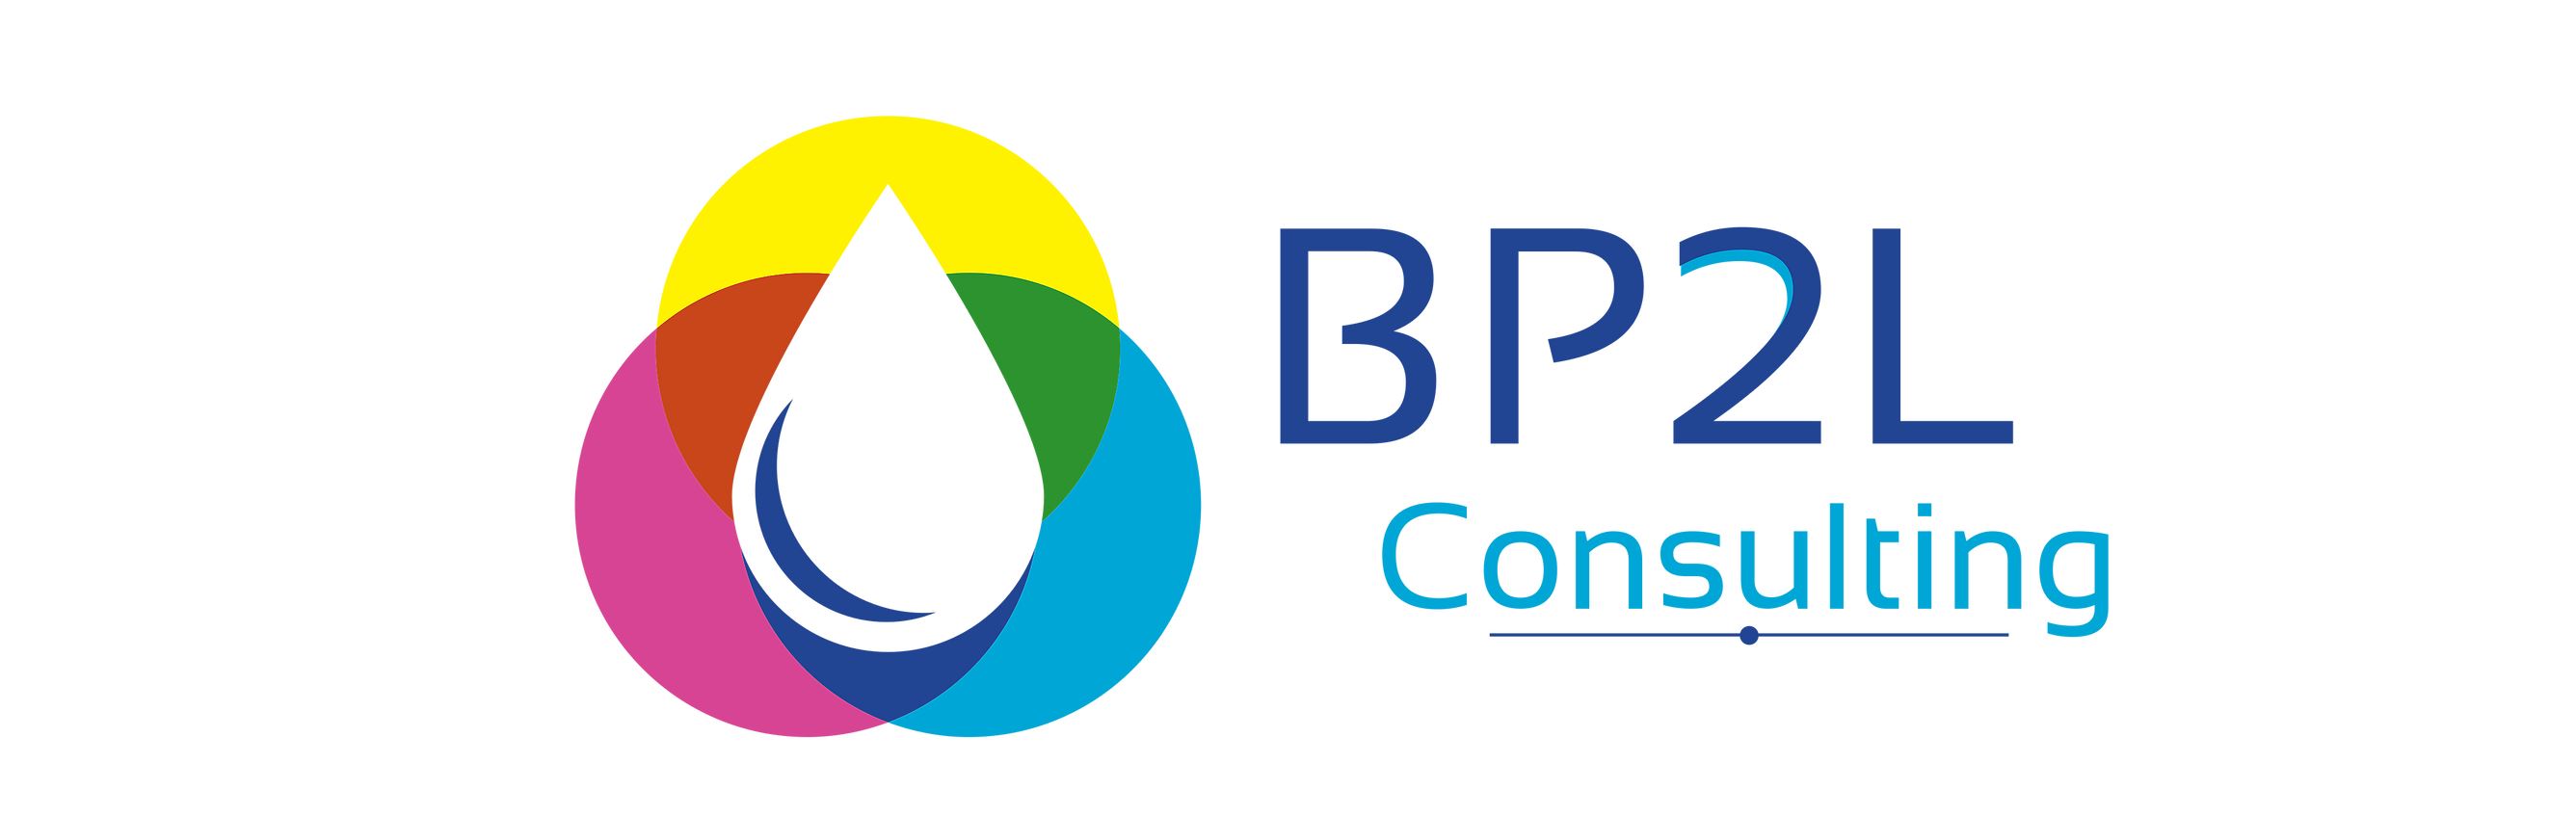 BP2L consulting